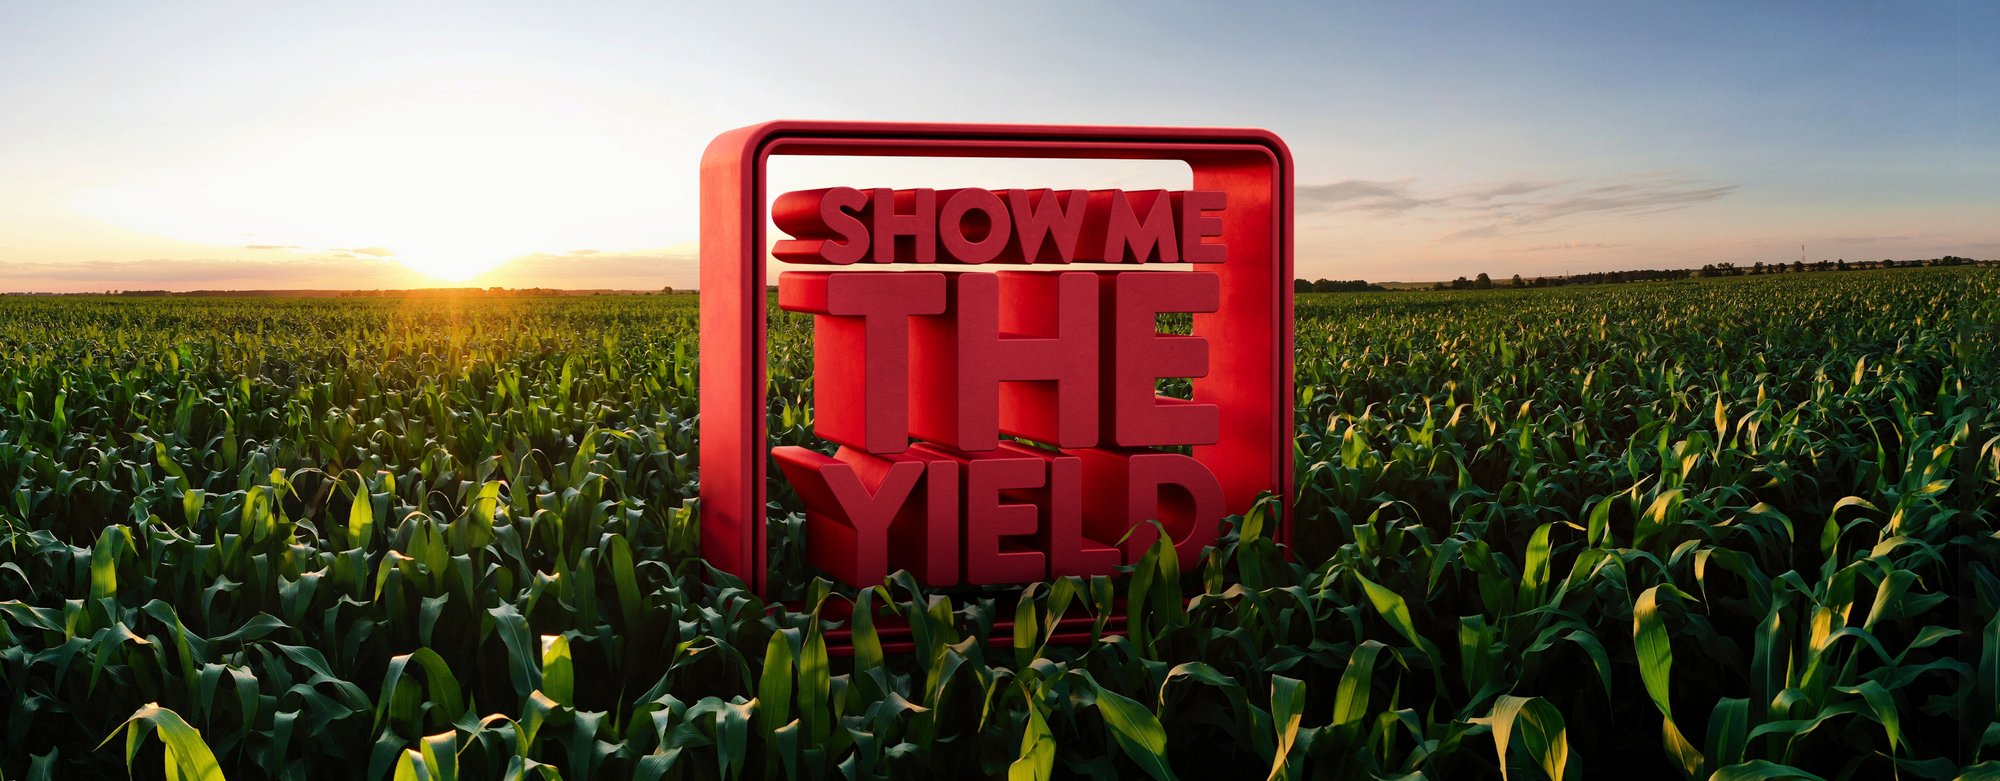 show-me-the-yield-header-corn